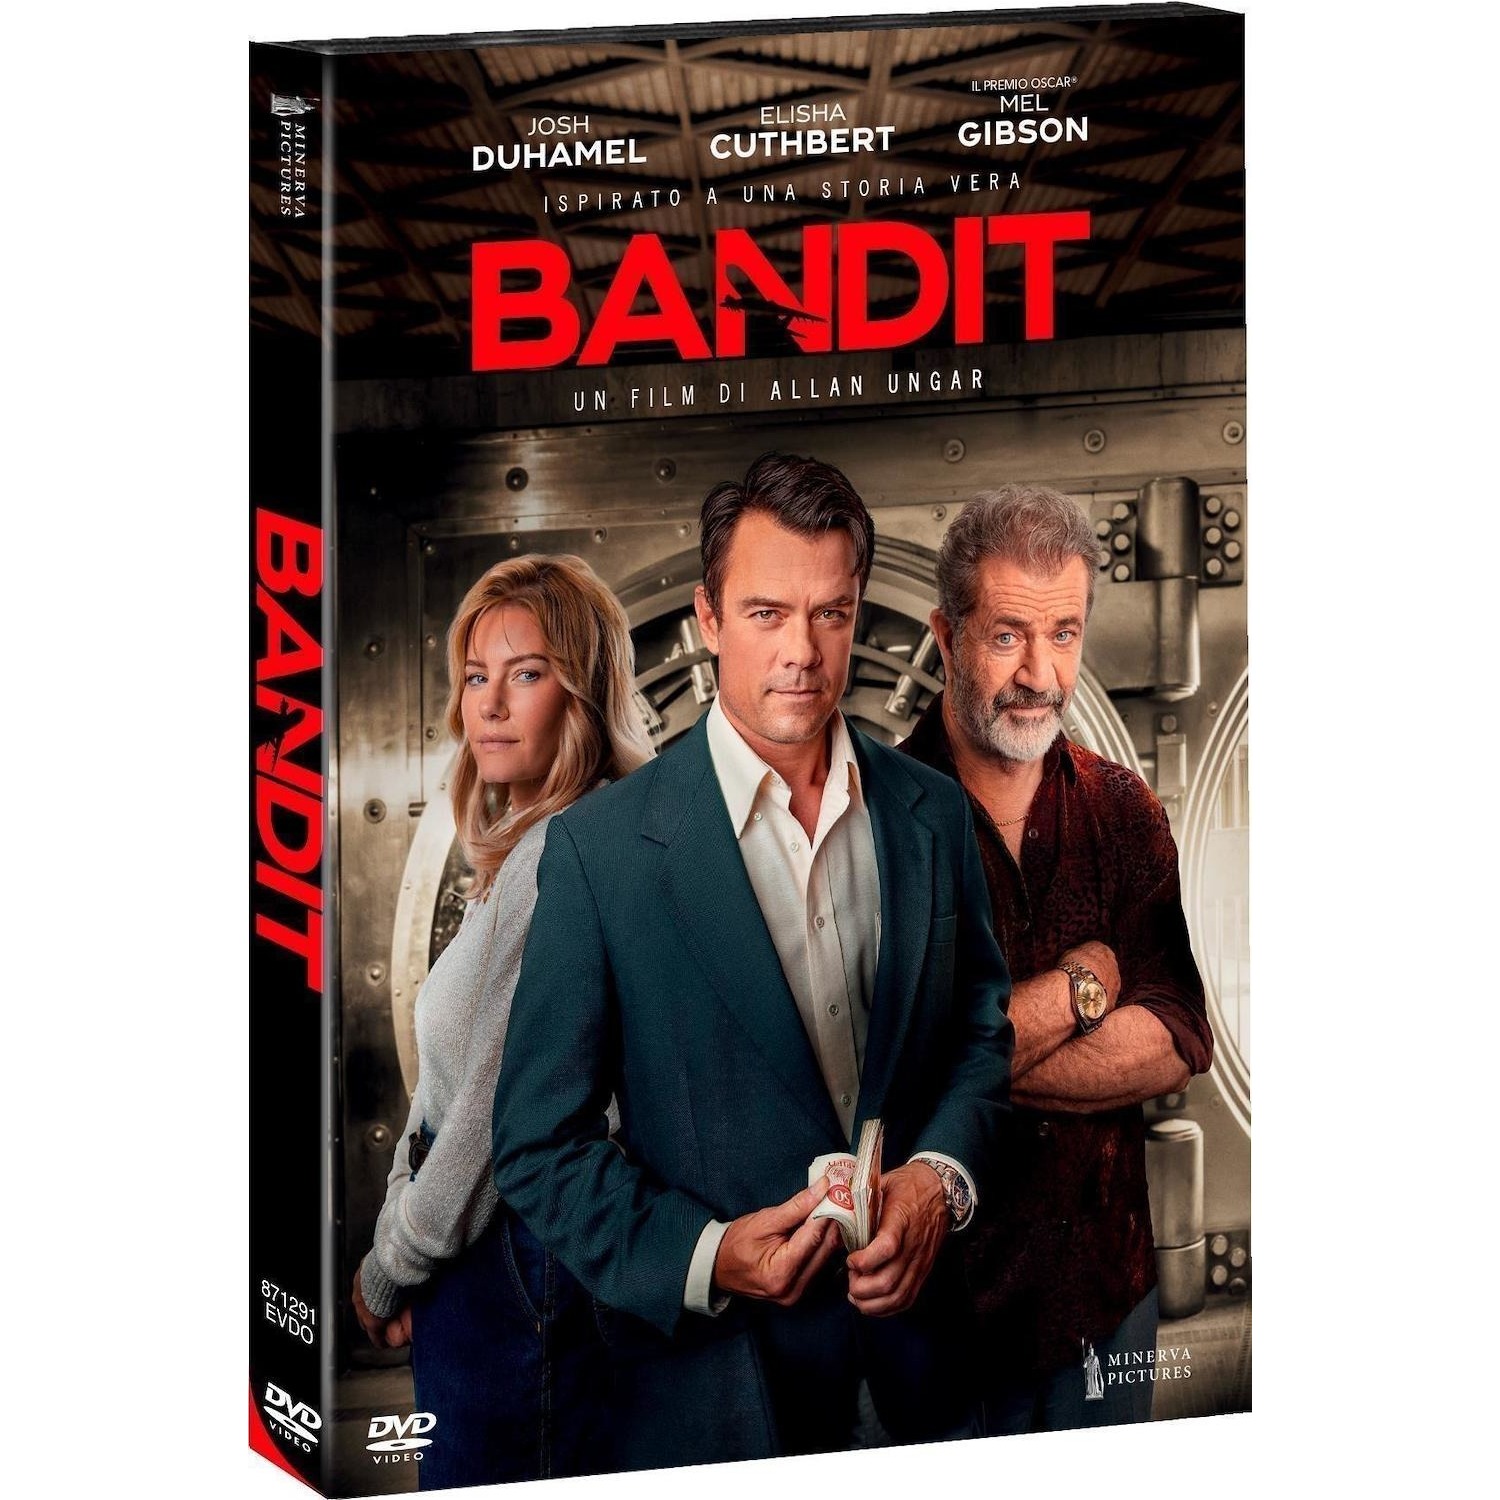 Immagine per DVD Bandit da DIMOStore